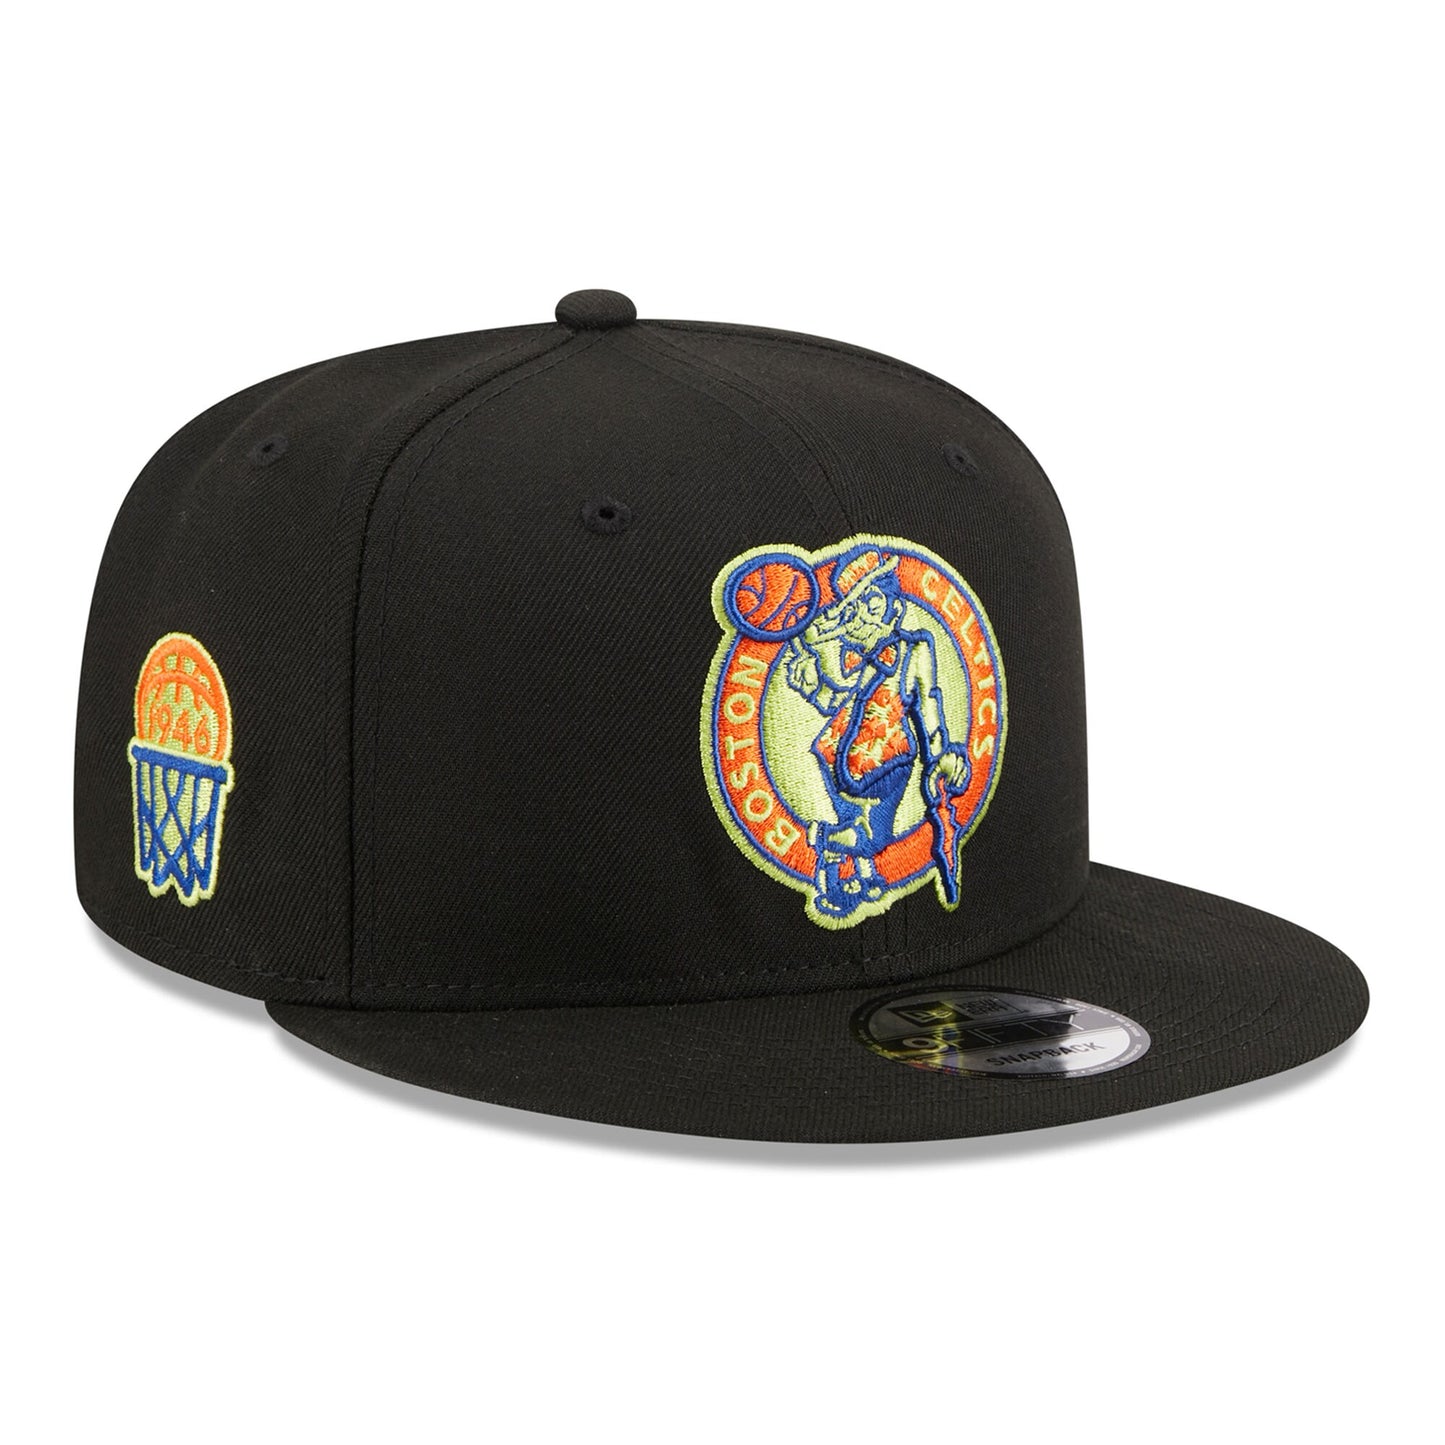 Boston Celtics New Era Neon Pop 9FIFTY Snapback Hat - Black